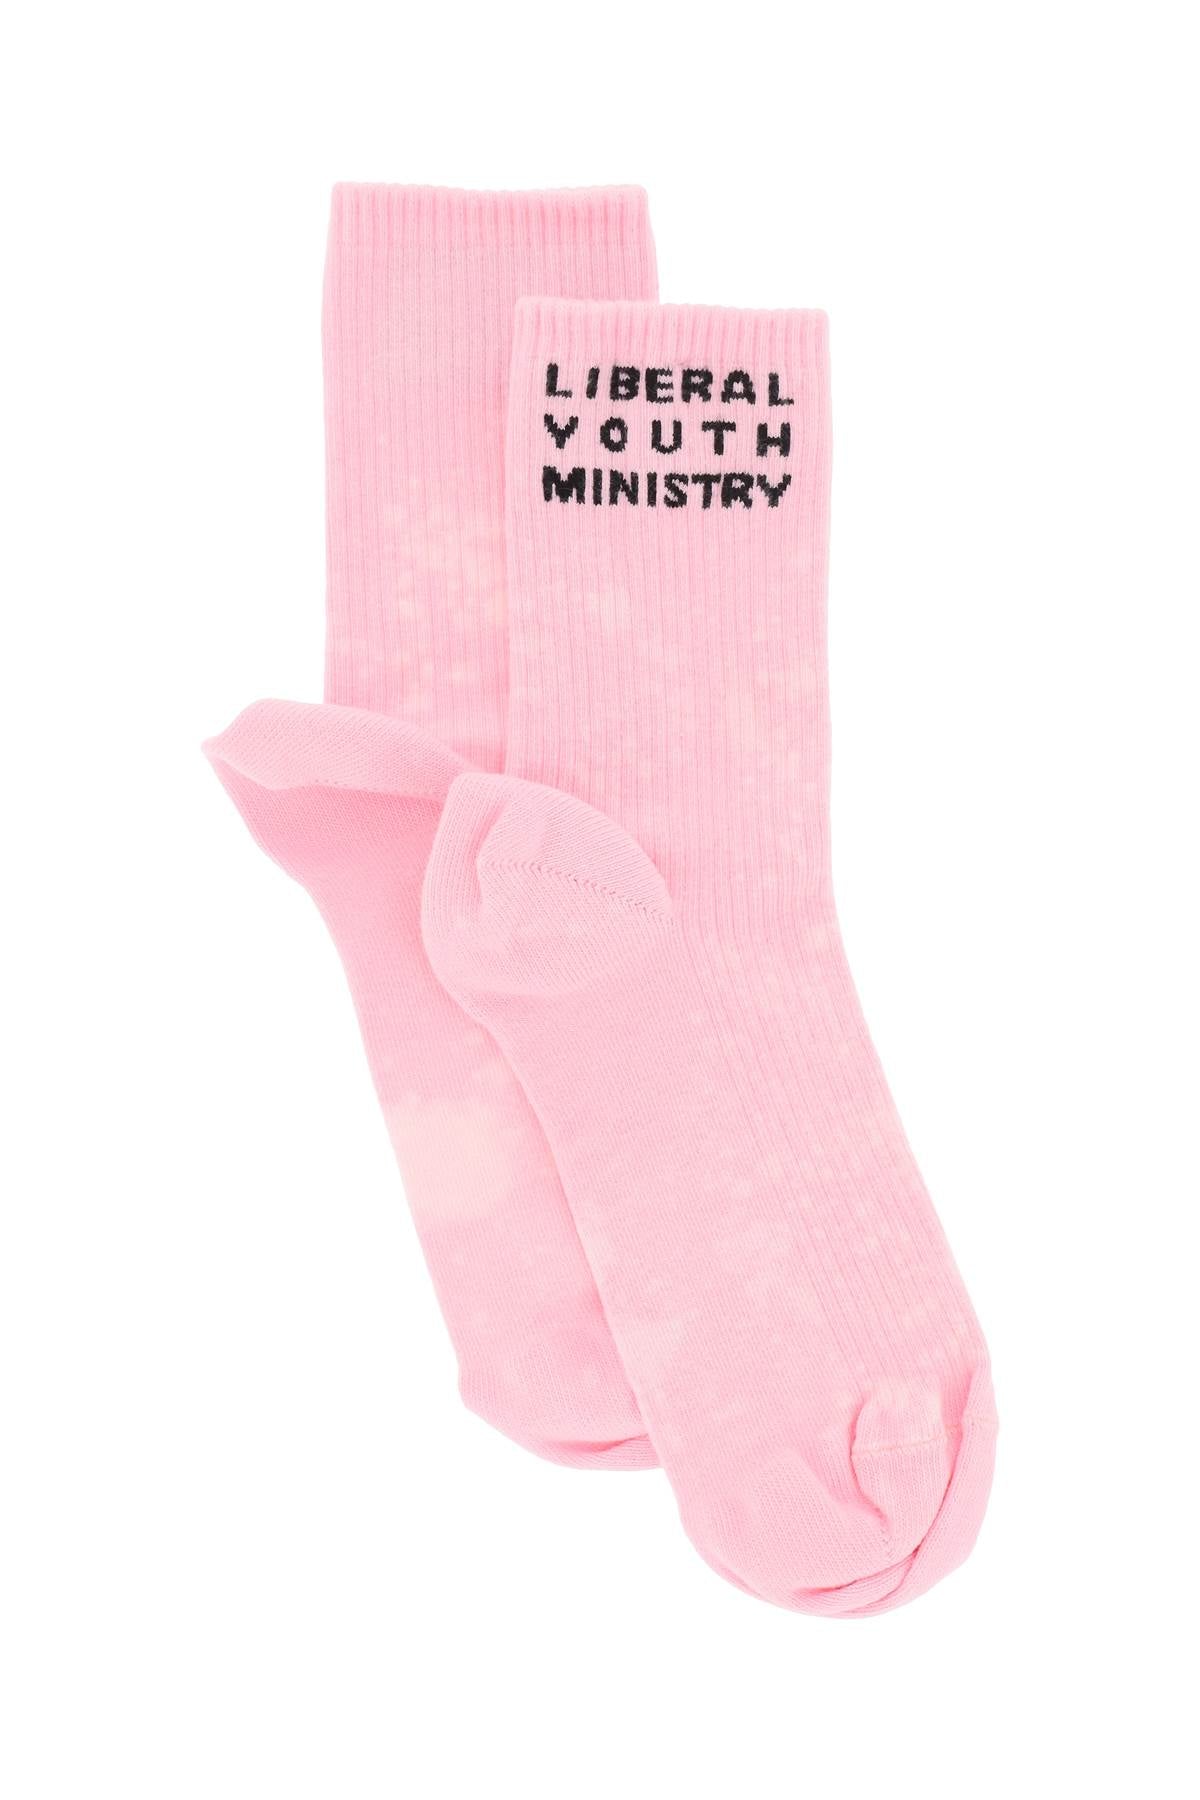 Liberal youth ministry logo sport socks-0